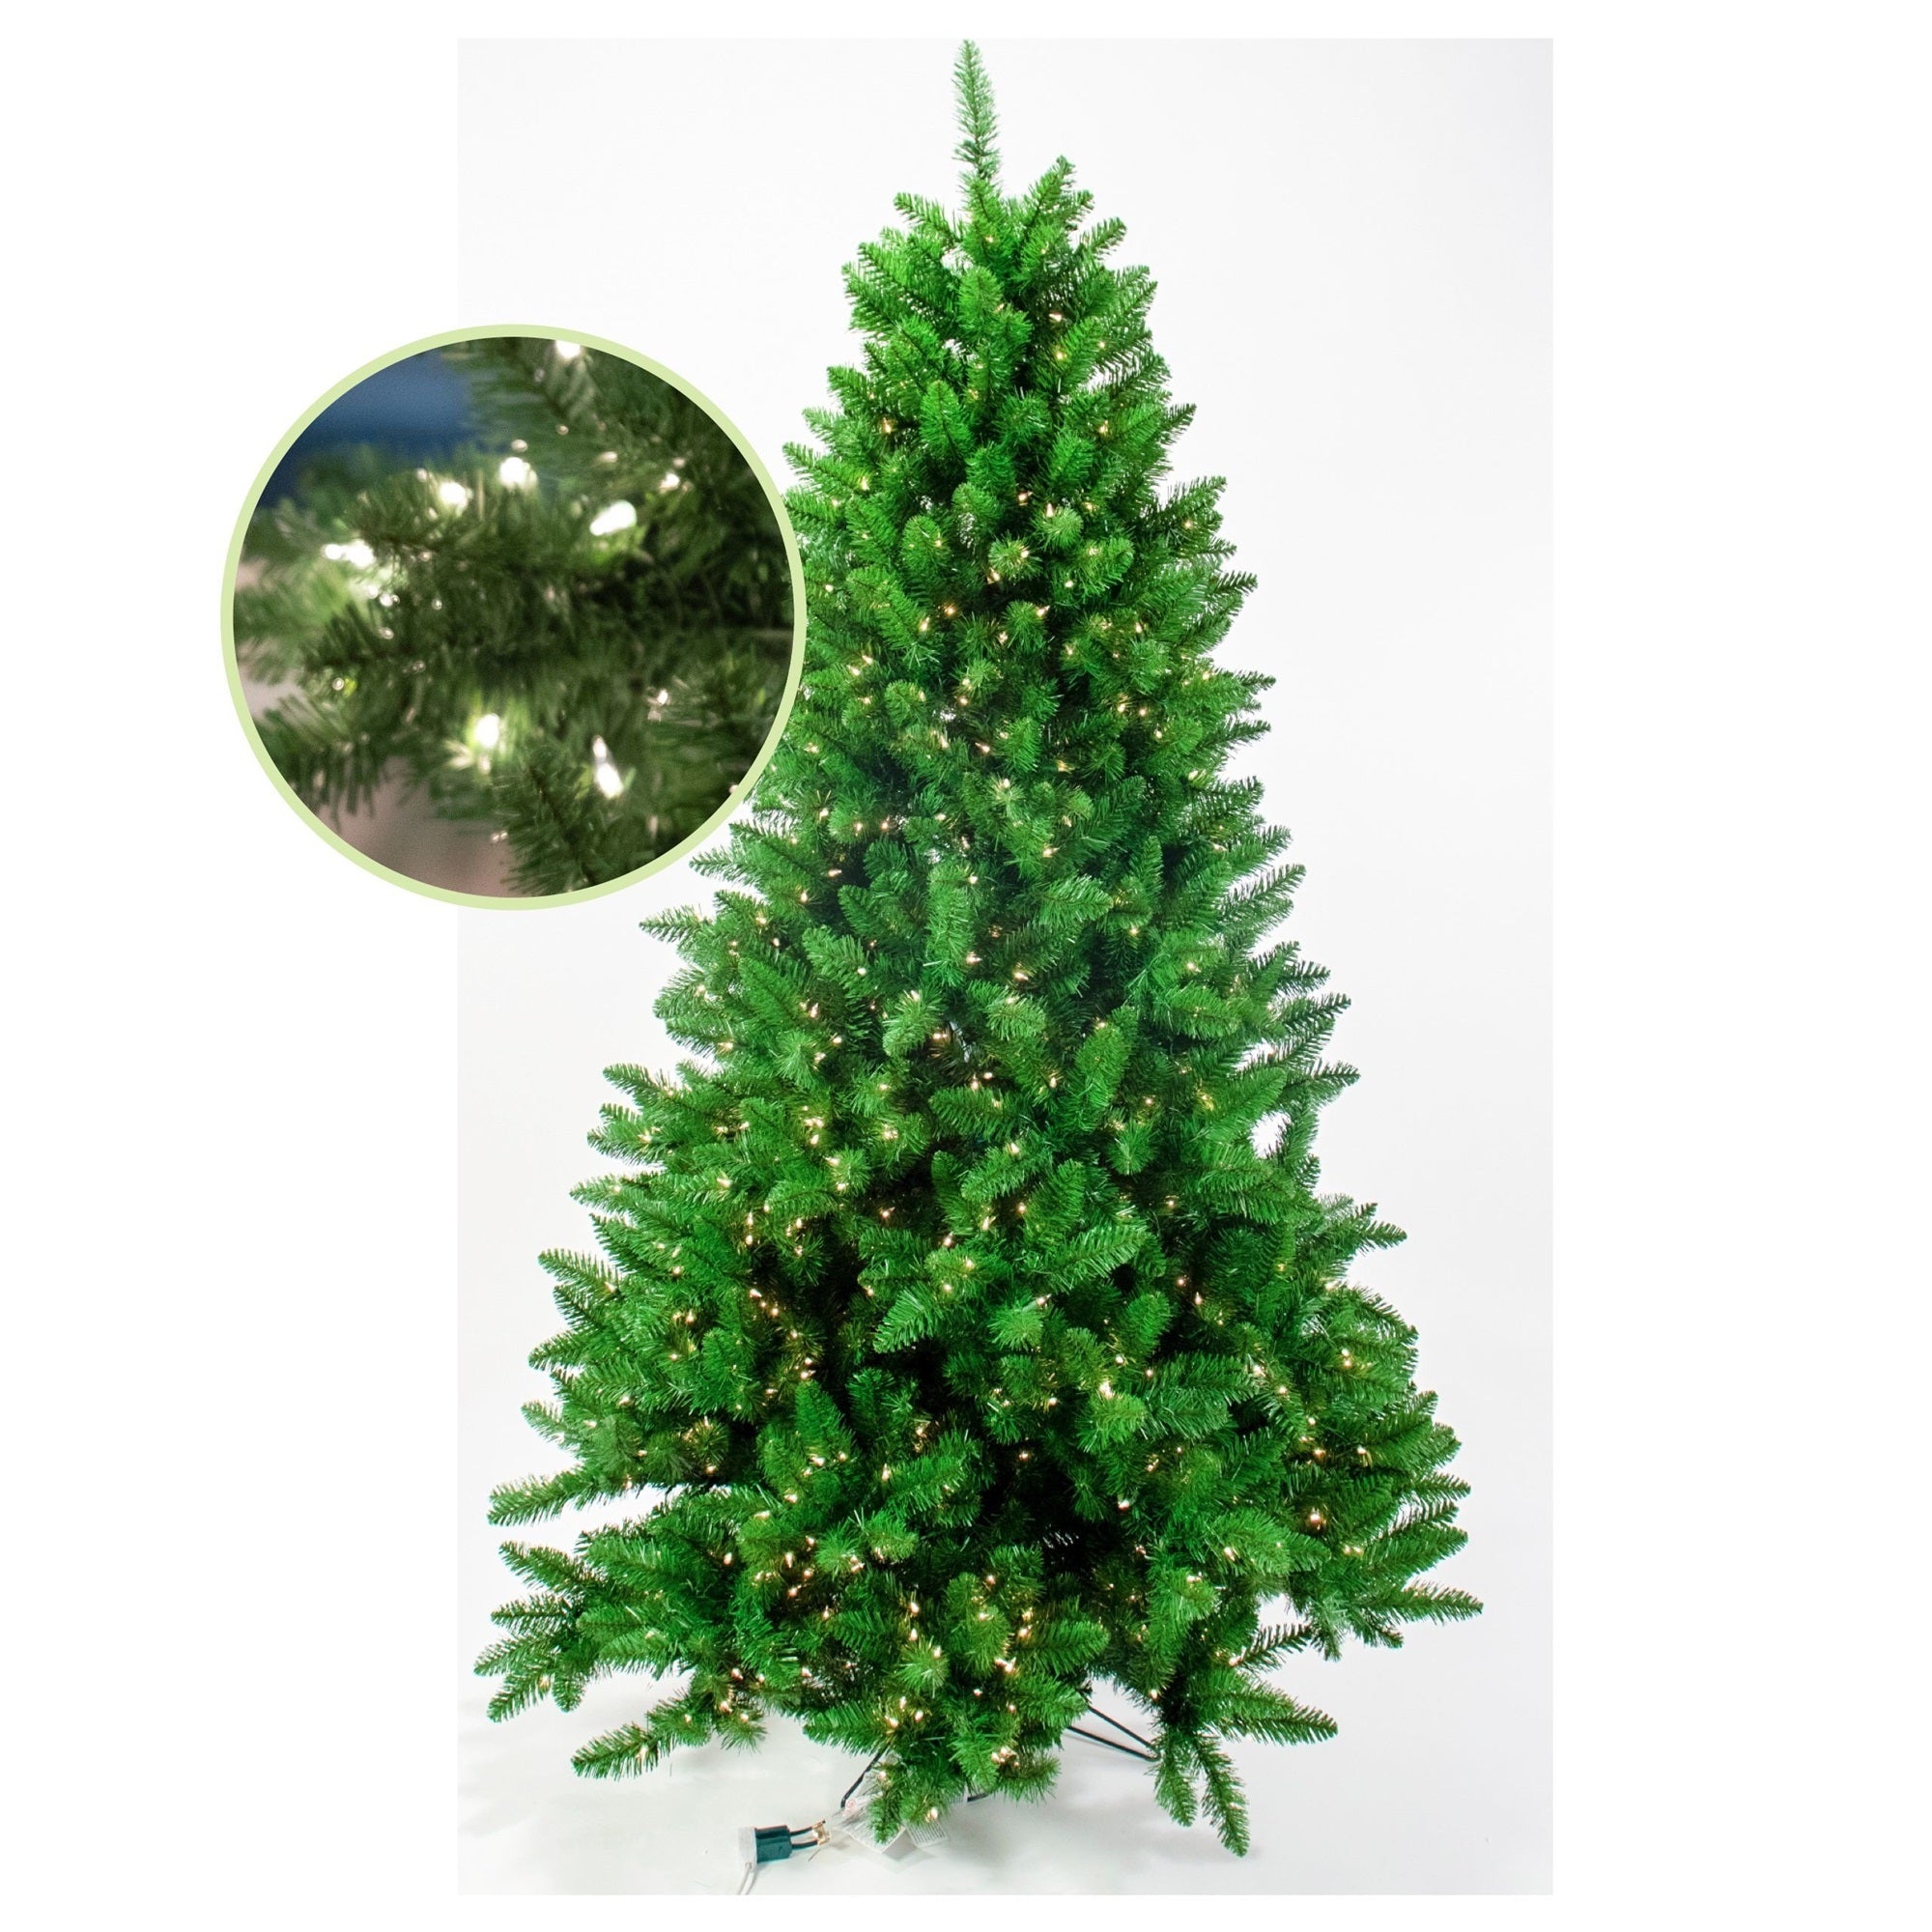 Garden Elements Artificial Pre-Lit Penn Spruce Christmas Tree, 426 Tips, 400 Clear Lights, 4.5 ft